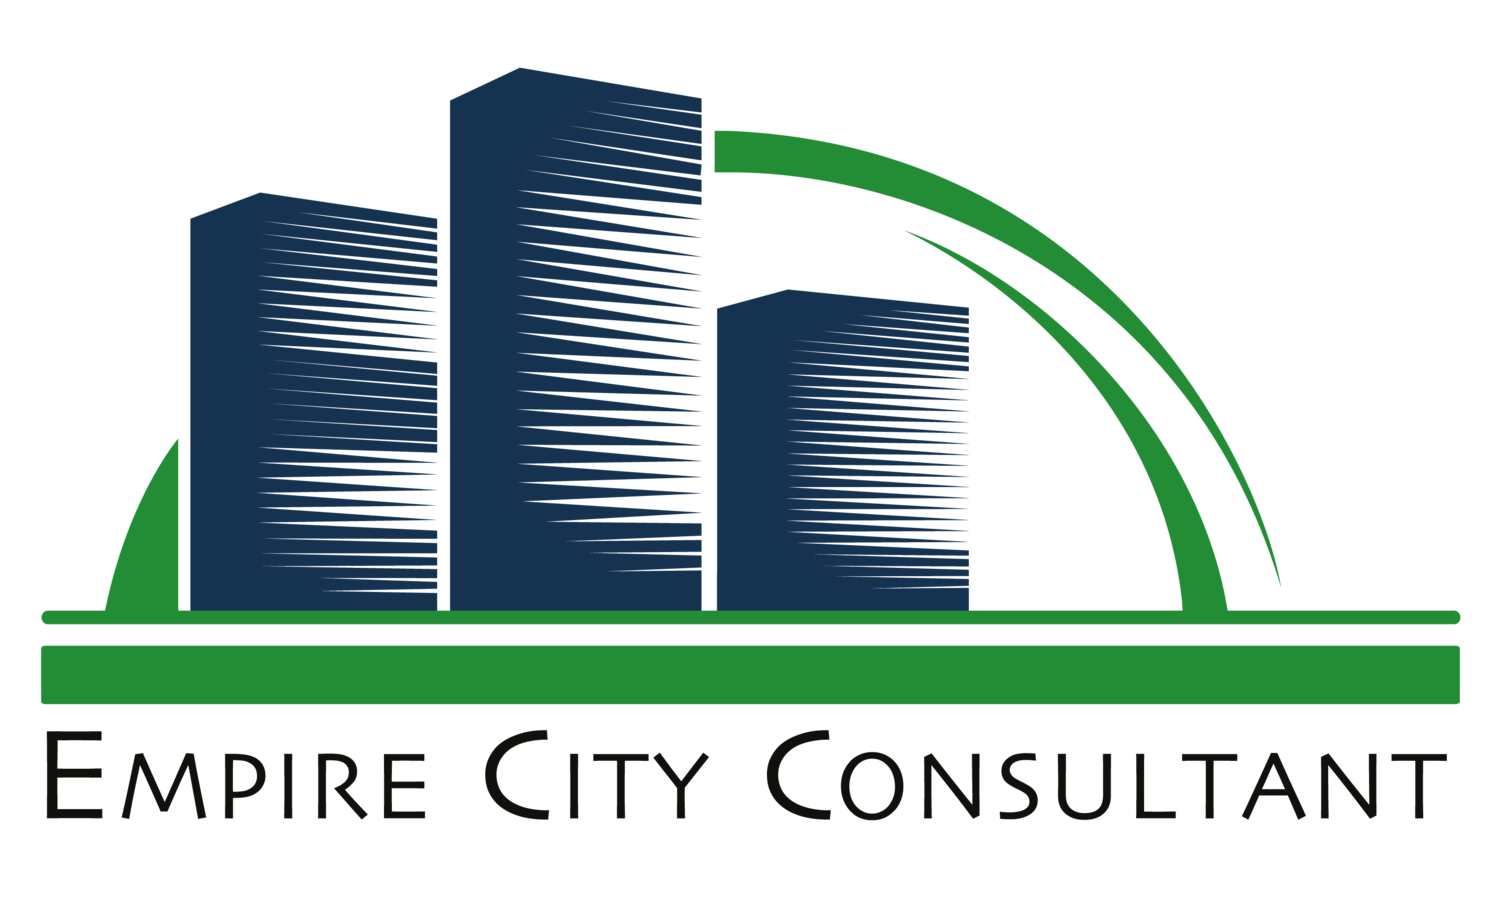 Empire City Consultant